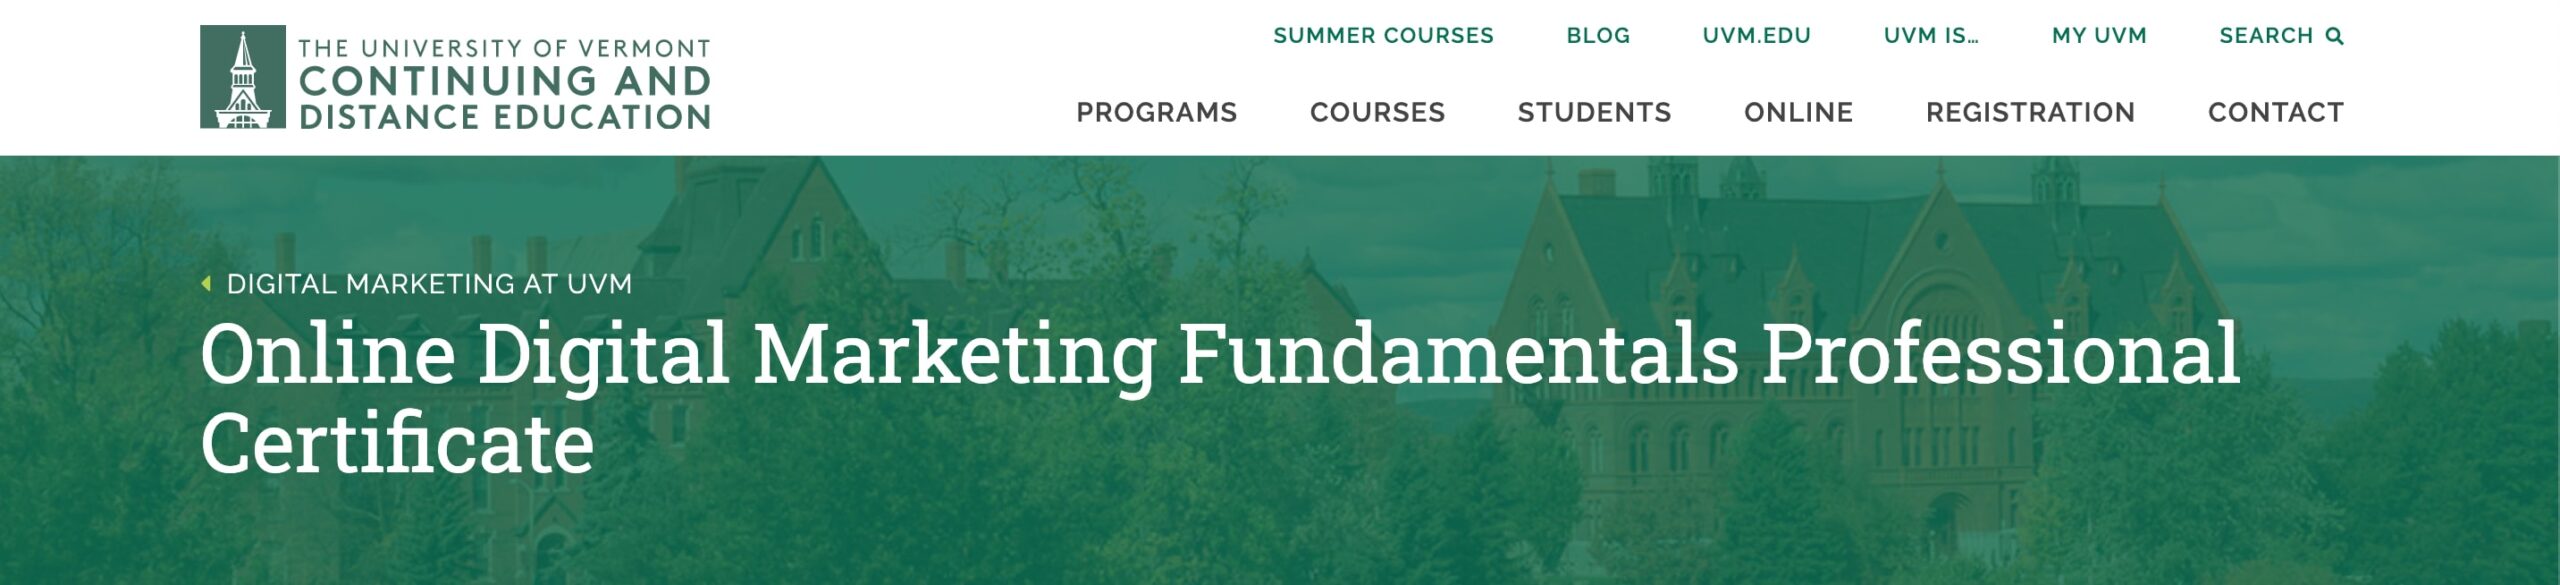 University of Vermont Digital Marketing Fundamental Certificate